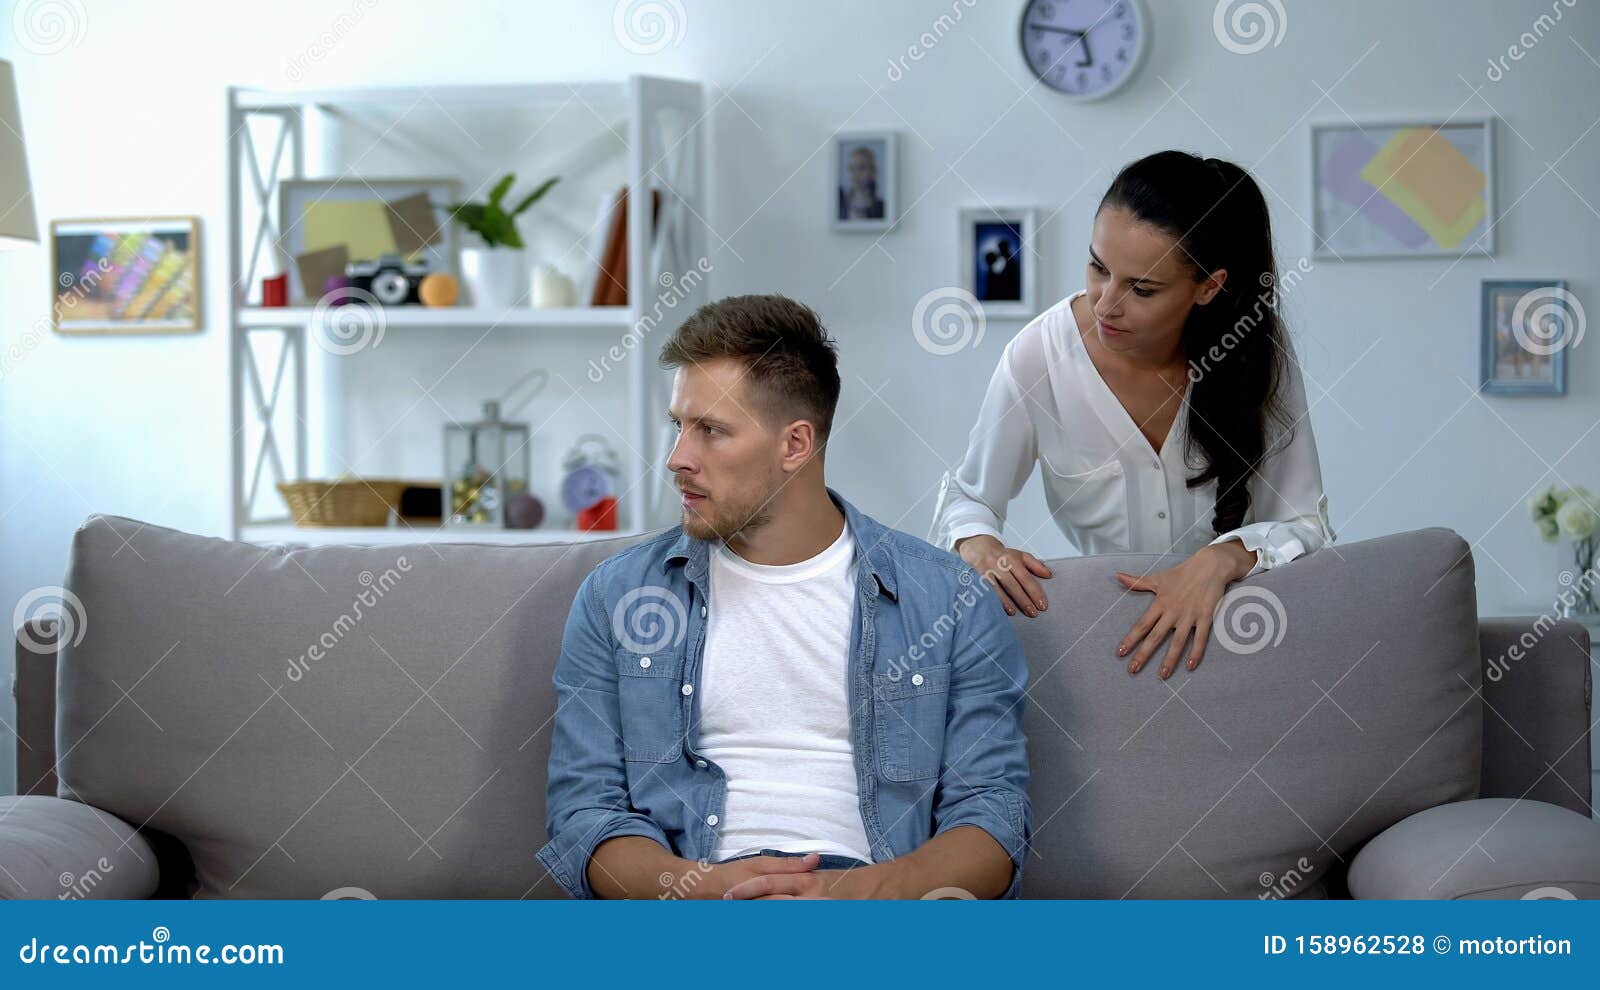 nervous woman criticizing lazy husband sitting on sofa, family conflict, problem